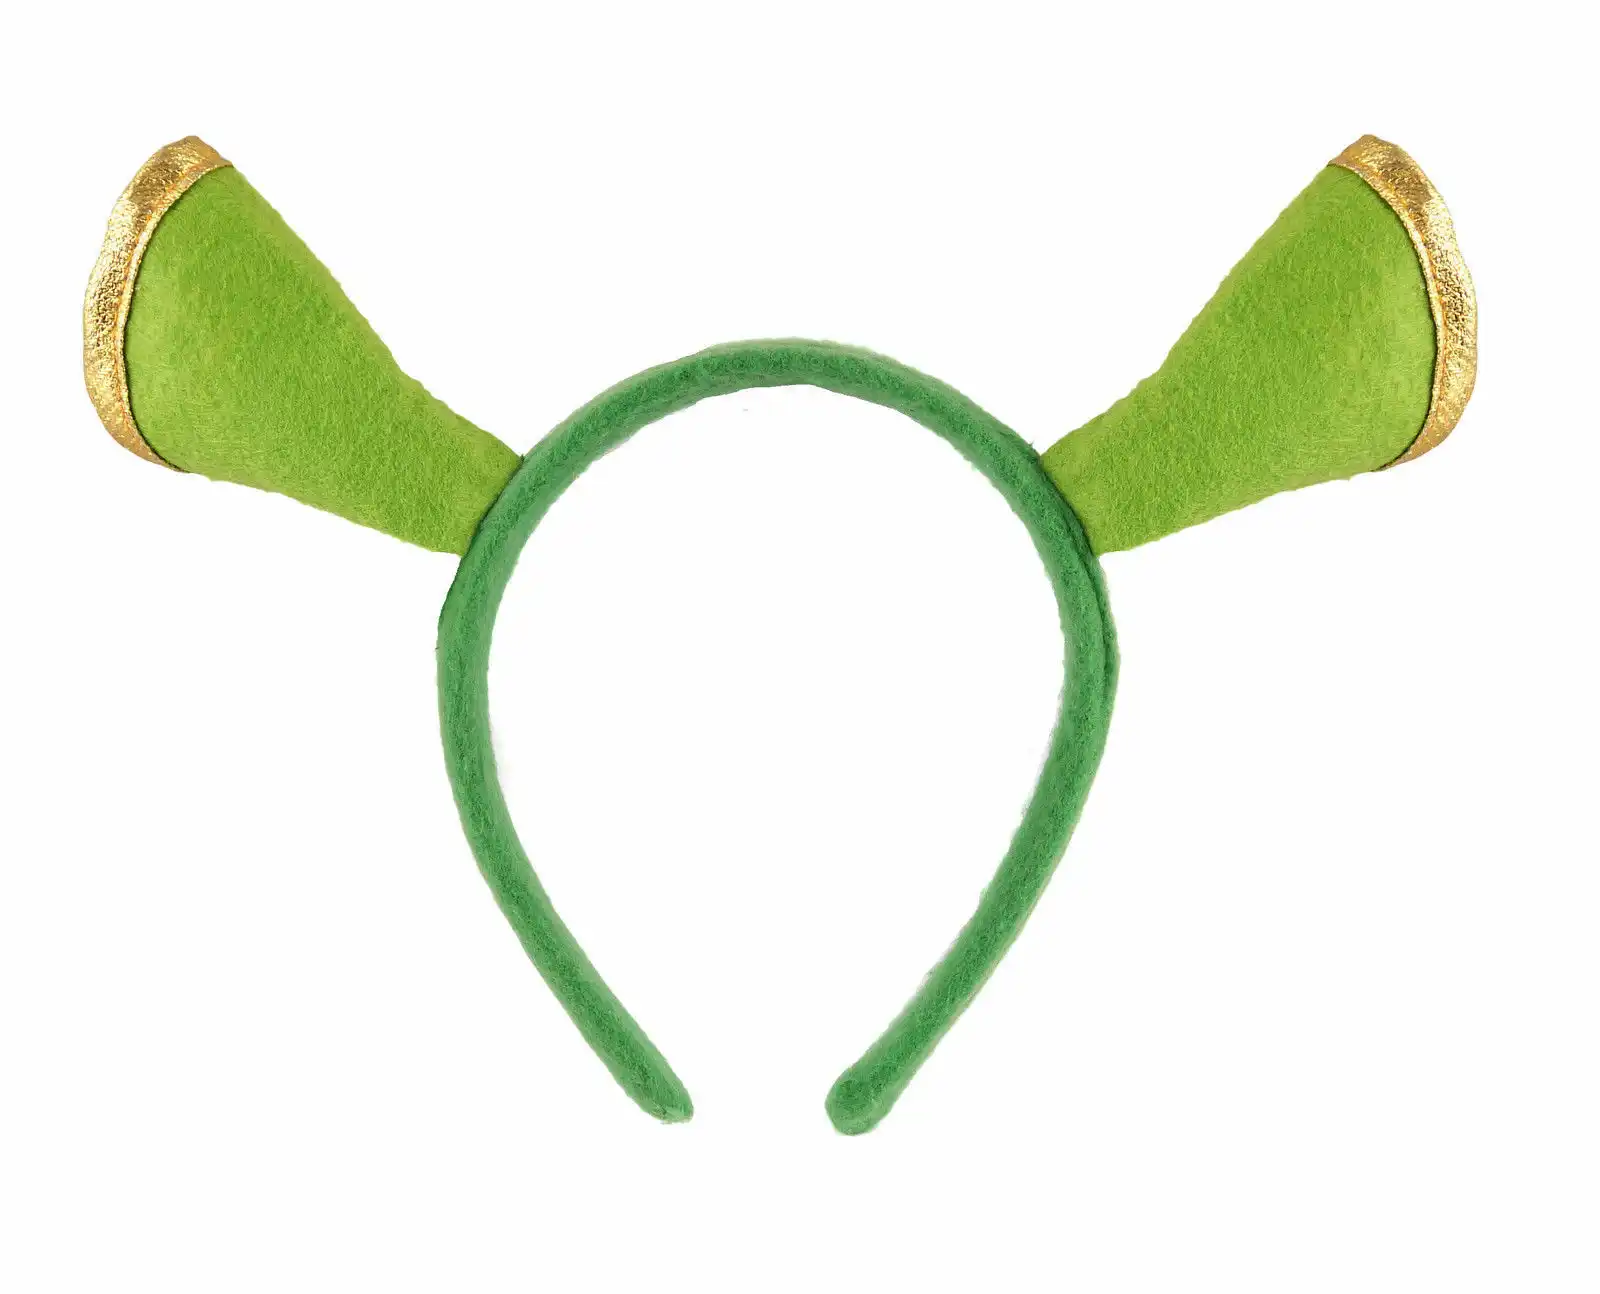 Fascia per capelli Ogre-Fancy Dress Costume animale verde orecchio crafk Outfit Party Cosplay fasce per animali